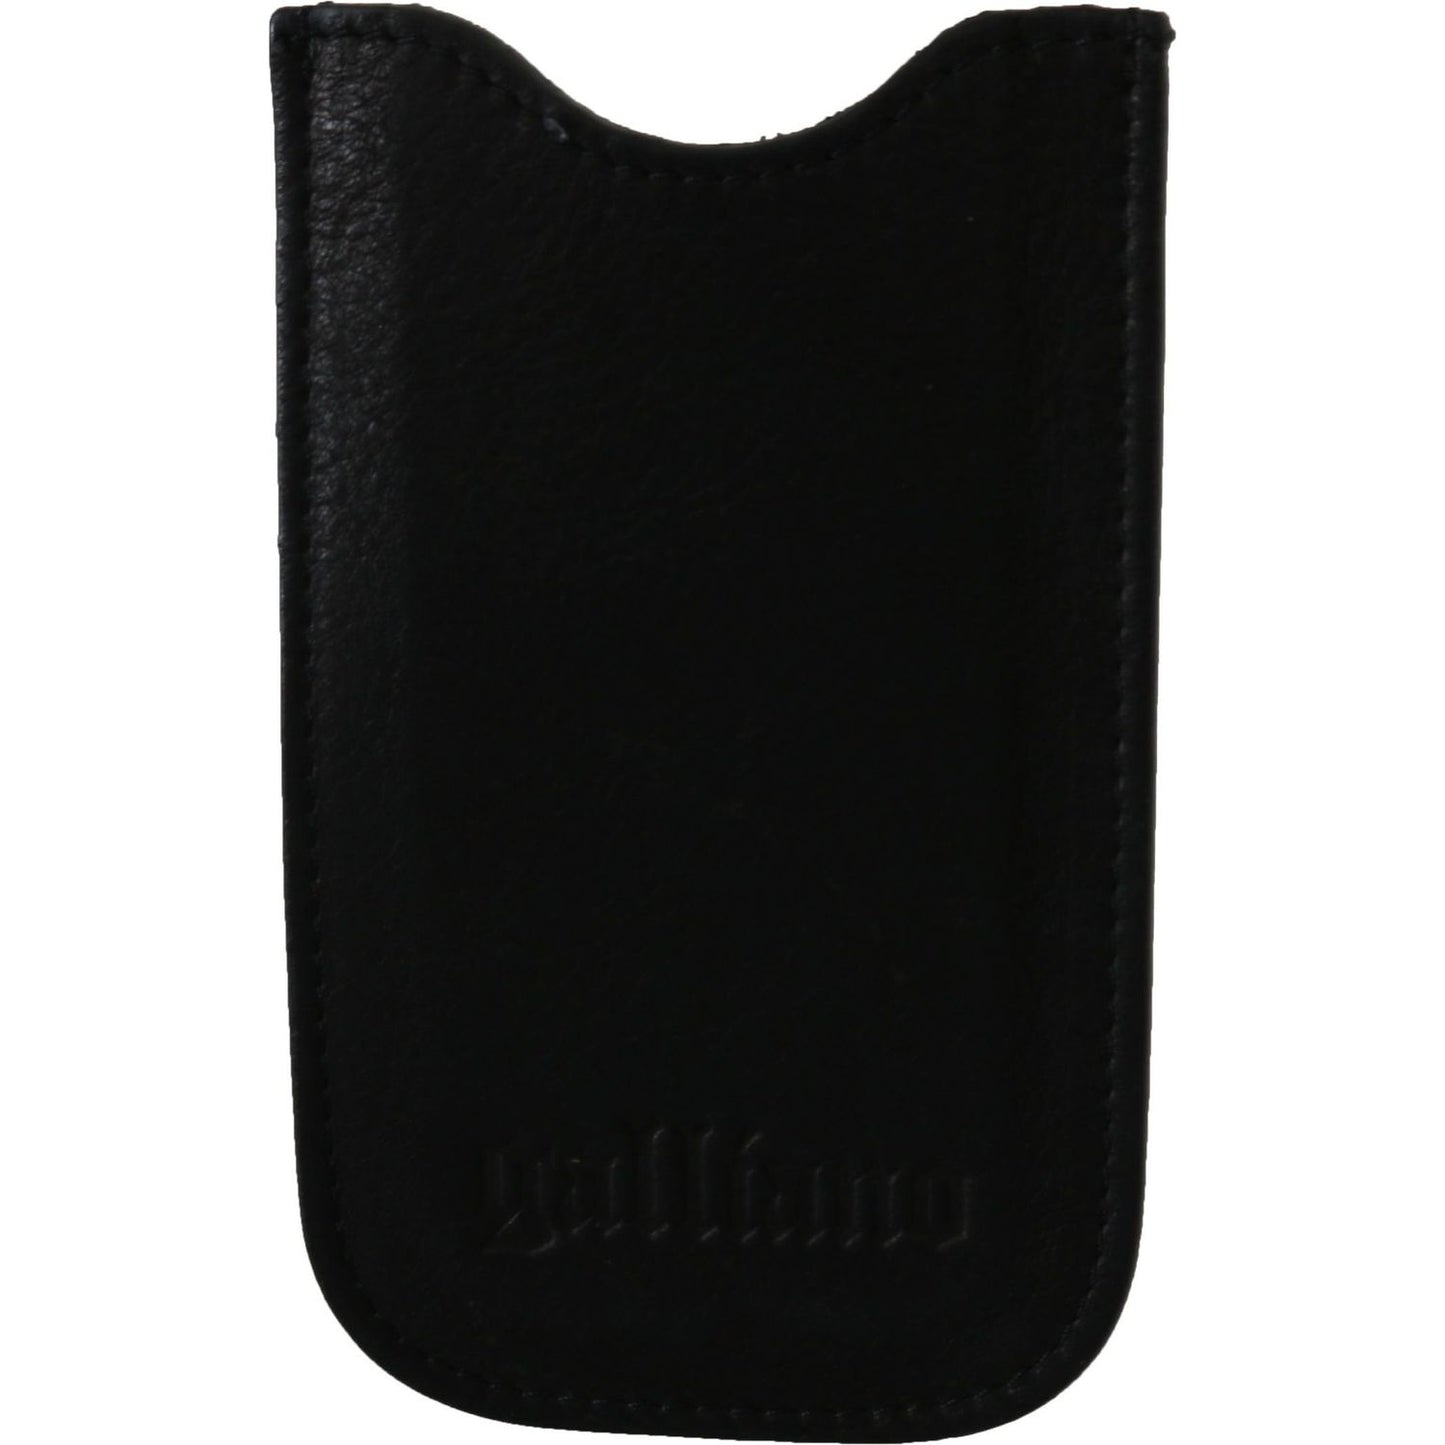 John Galliano Elegant Black Genuine Leather Men's Wallet black-leather-multifunctional-men-id-bill-card-holder-wallet Wallet IMG_1775-scaled-0a36bdc5-090.jpg